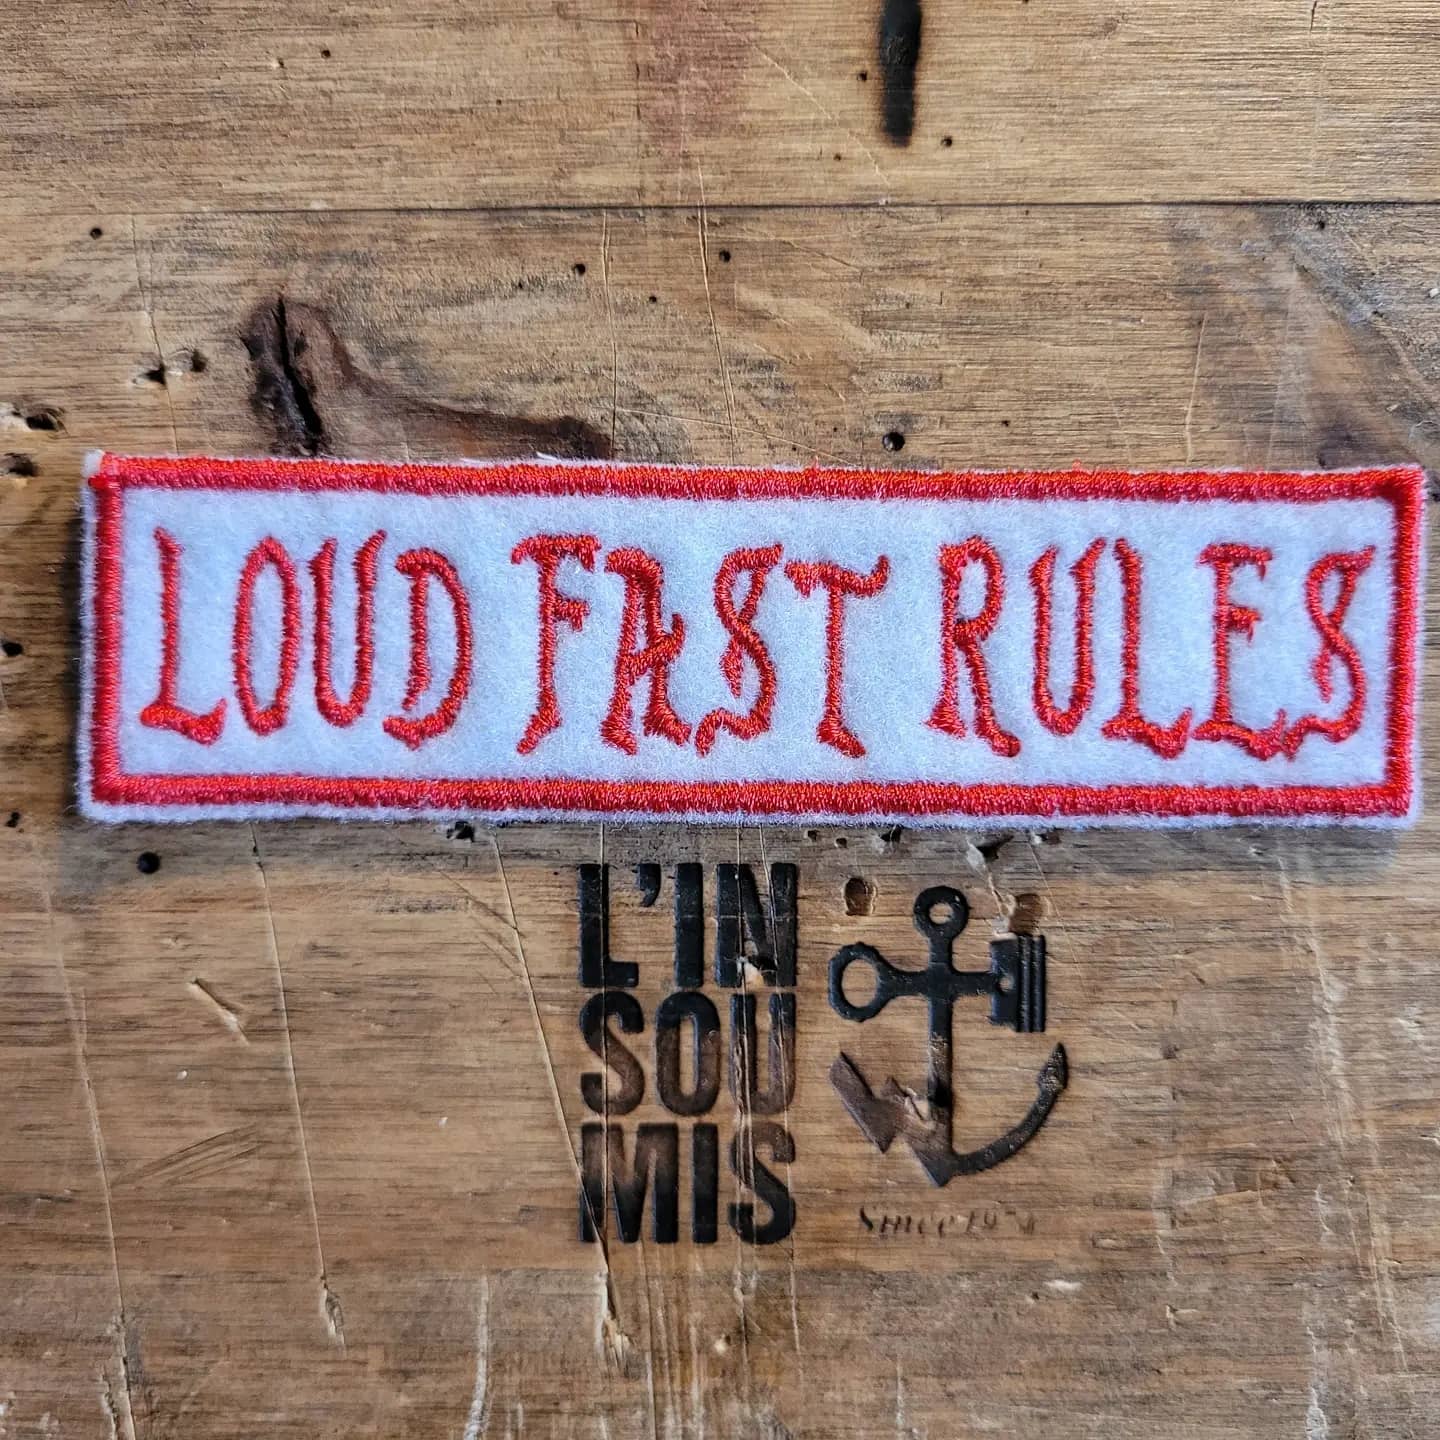 Loud Fast Rules